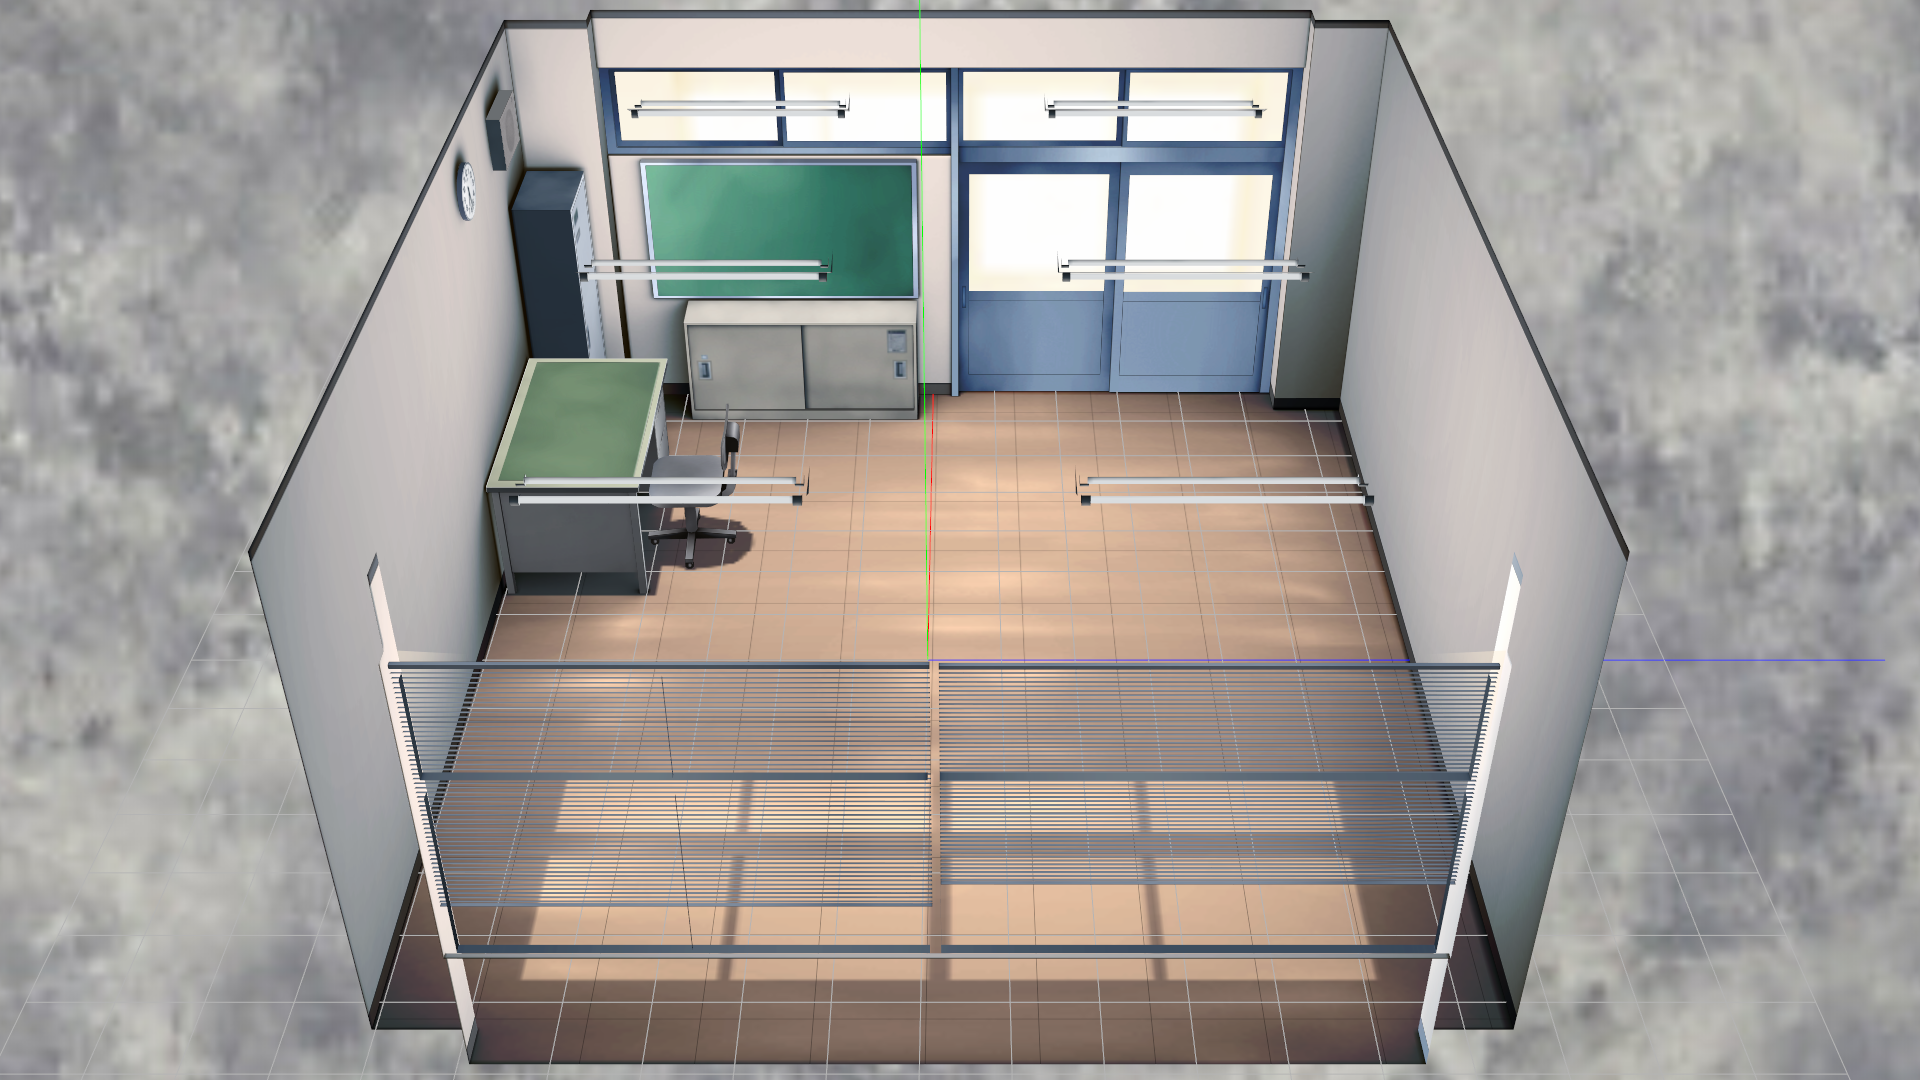 DL] MMD Empty School Office Stage by Maddoktor2 on DeviantArt